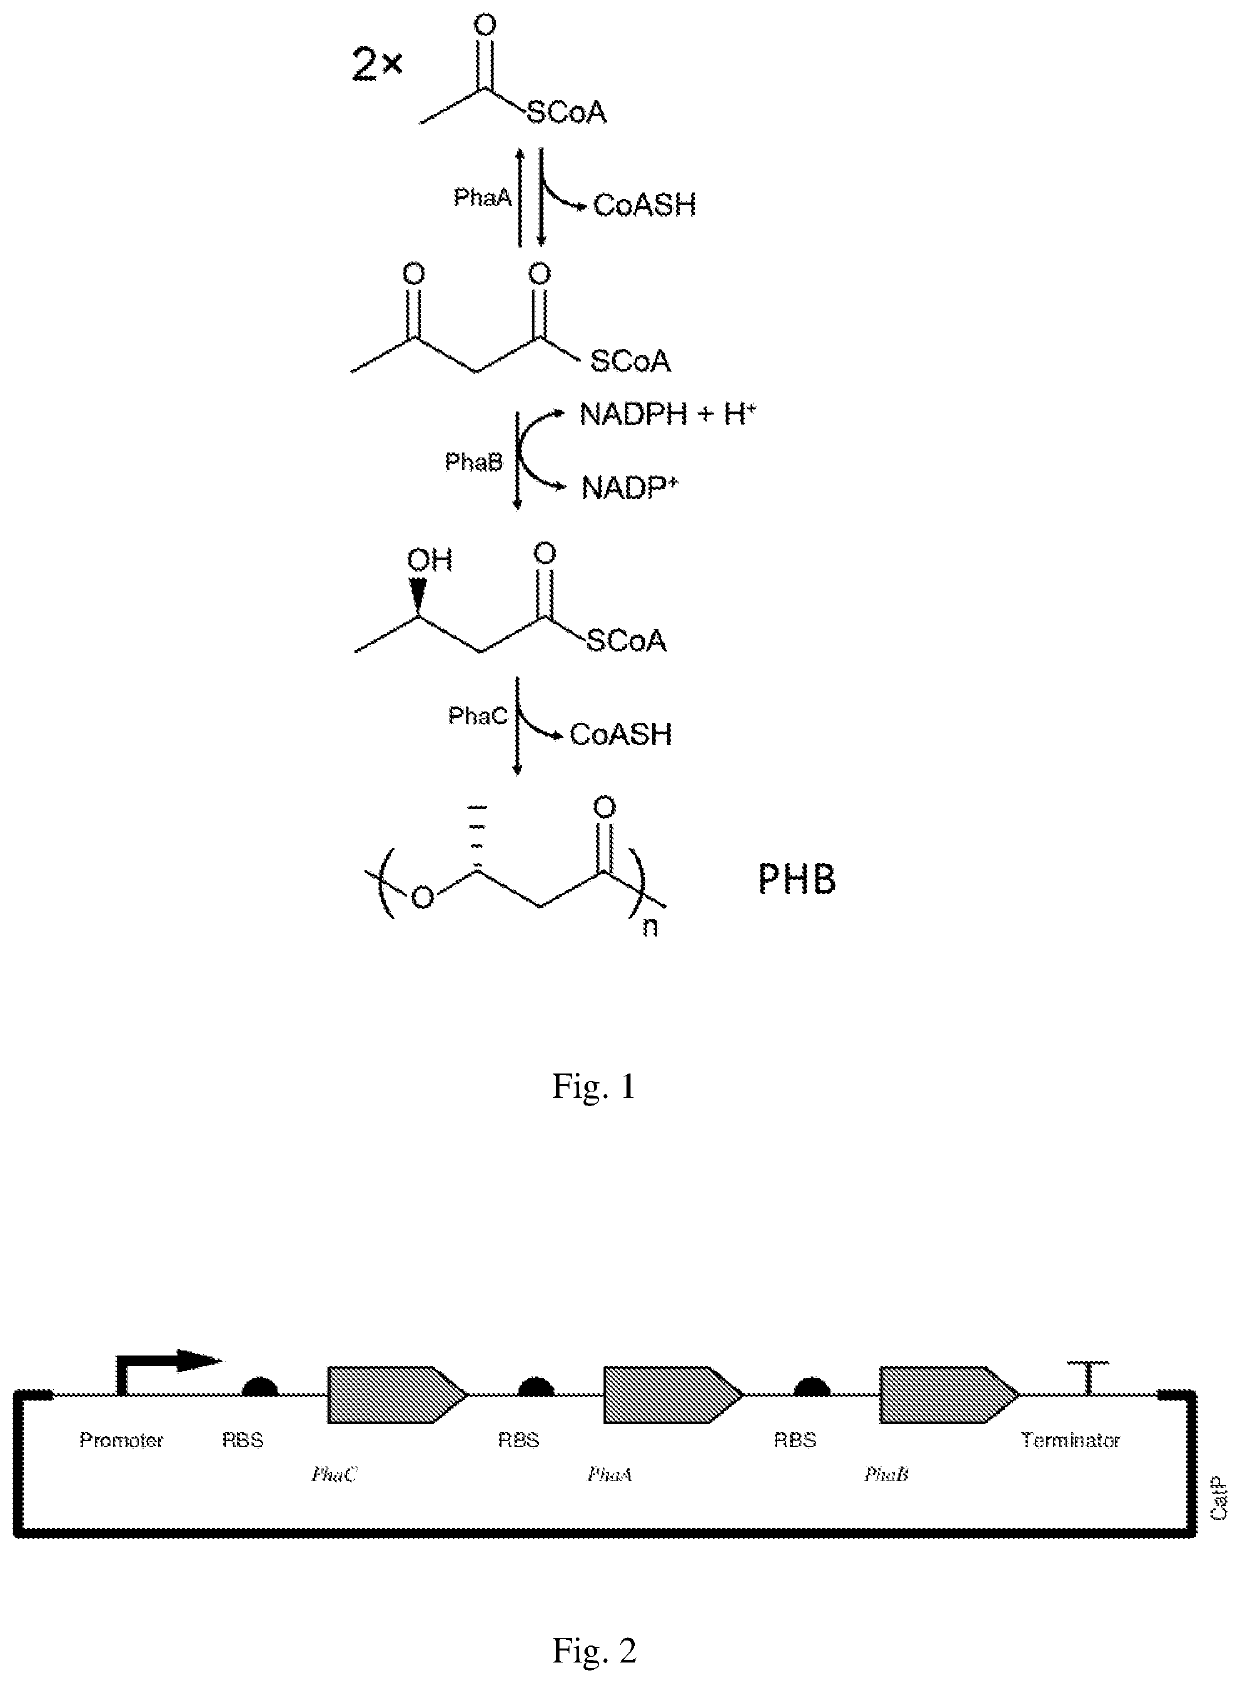 Production of polyhydroxybutyrate in wood-ljungdahl microorganisms